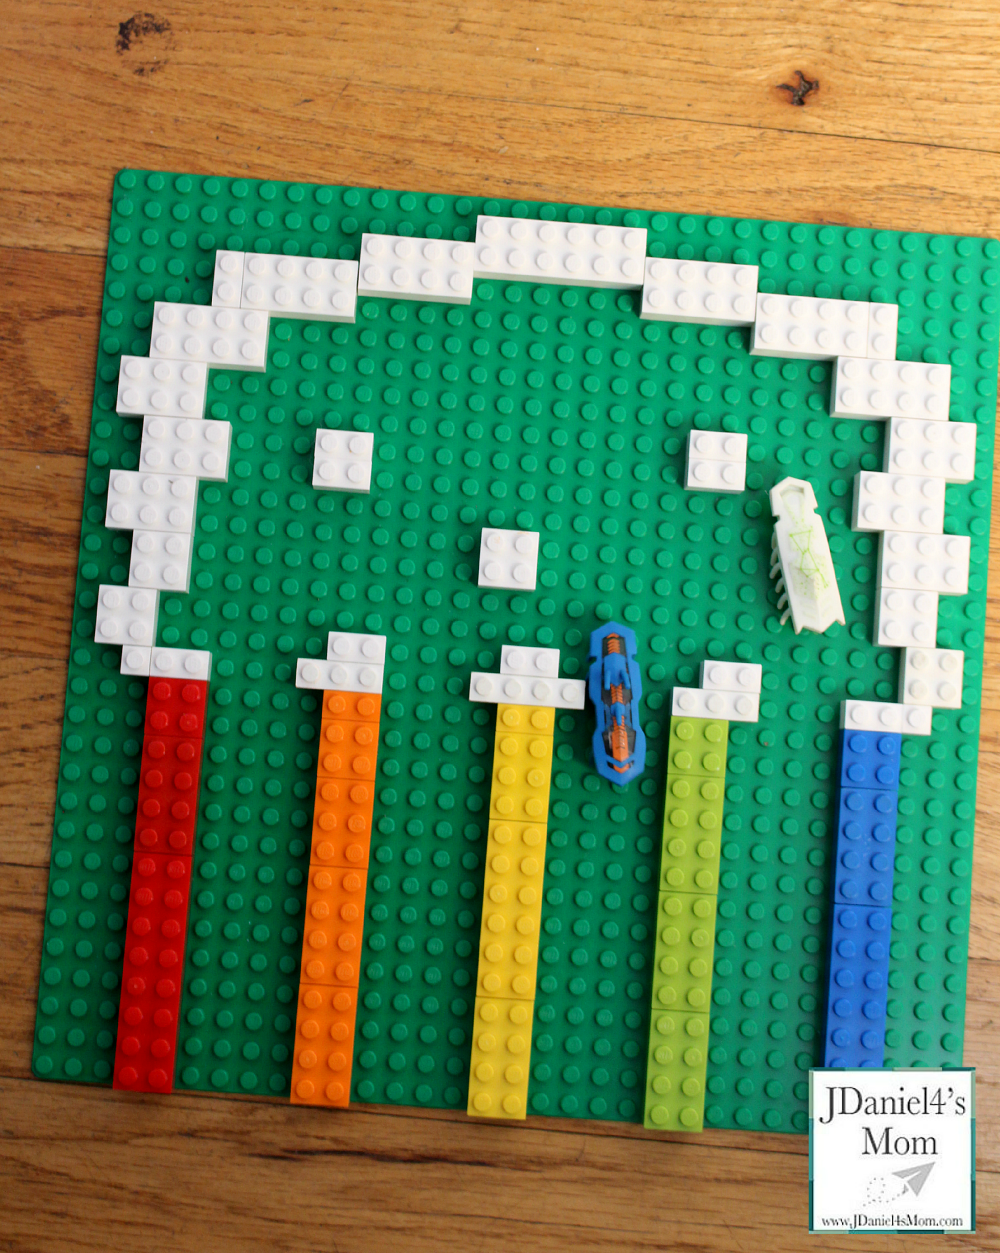 Hexbug Rainbow LEGO Track